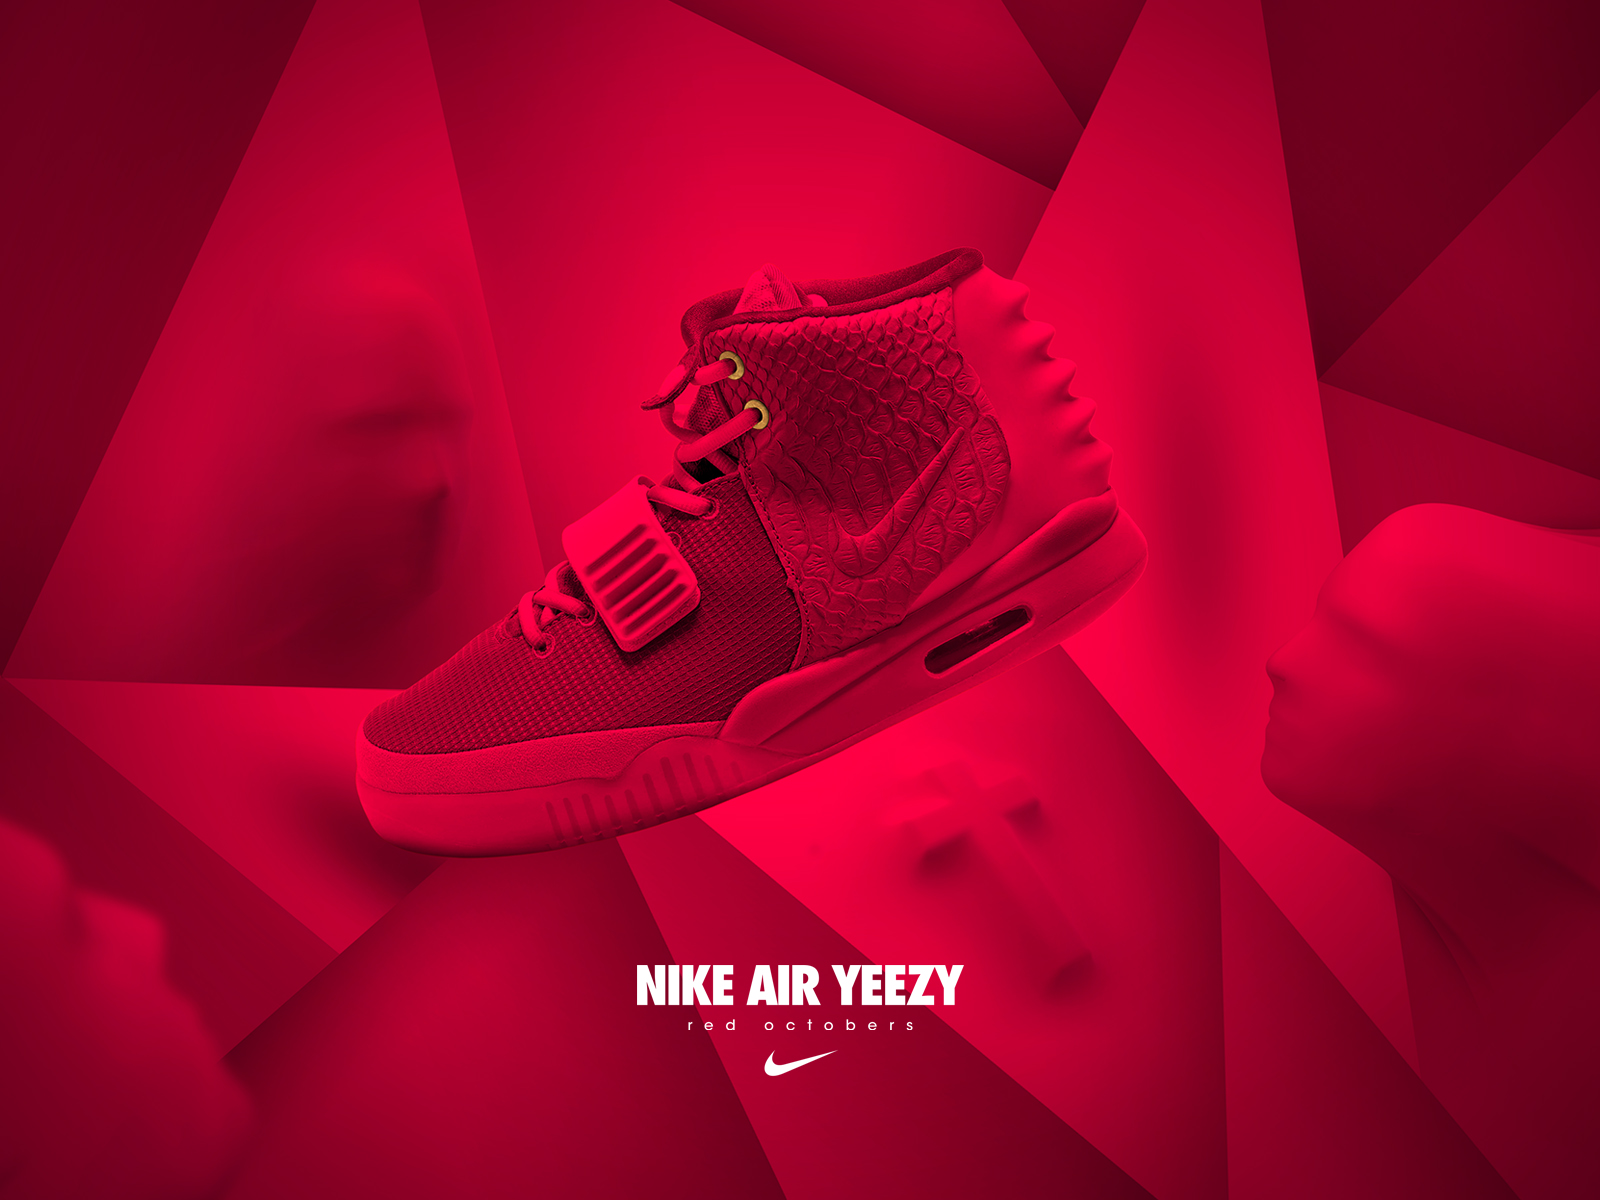 Todayshype Nike Air Yeezy Ii X Red Octobers Illustration By Leroy Van